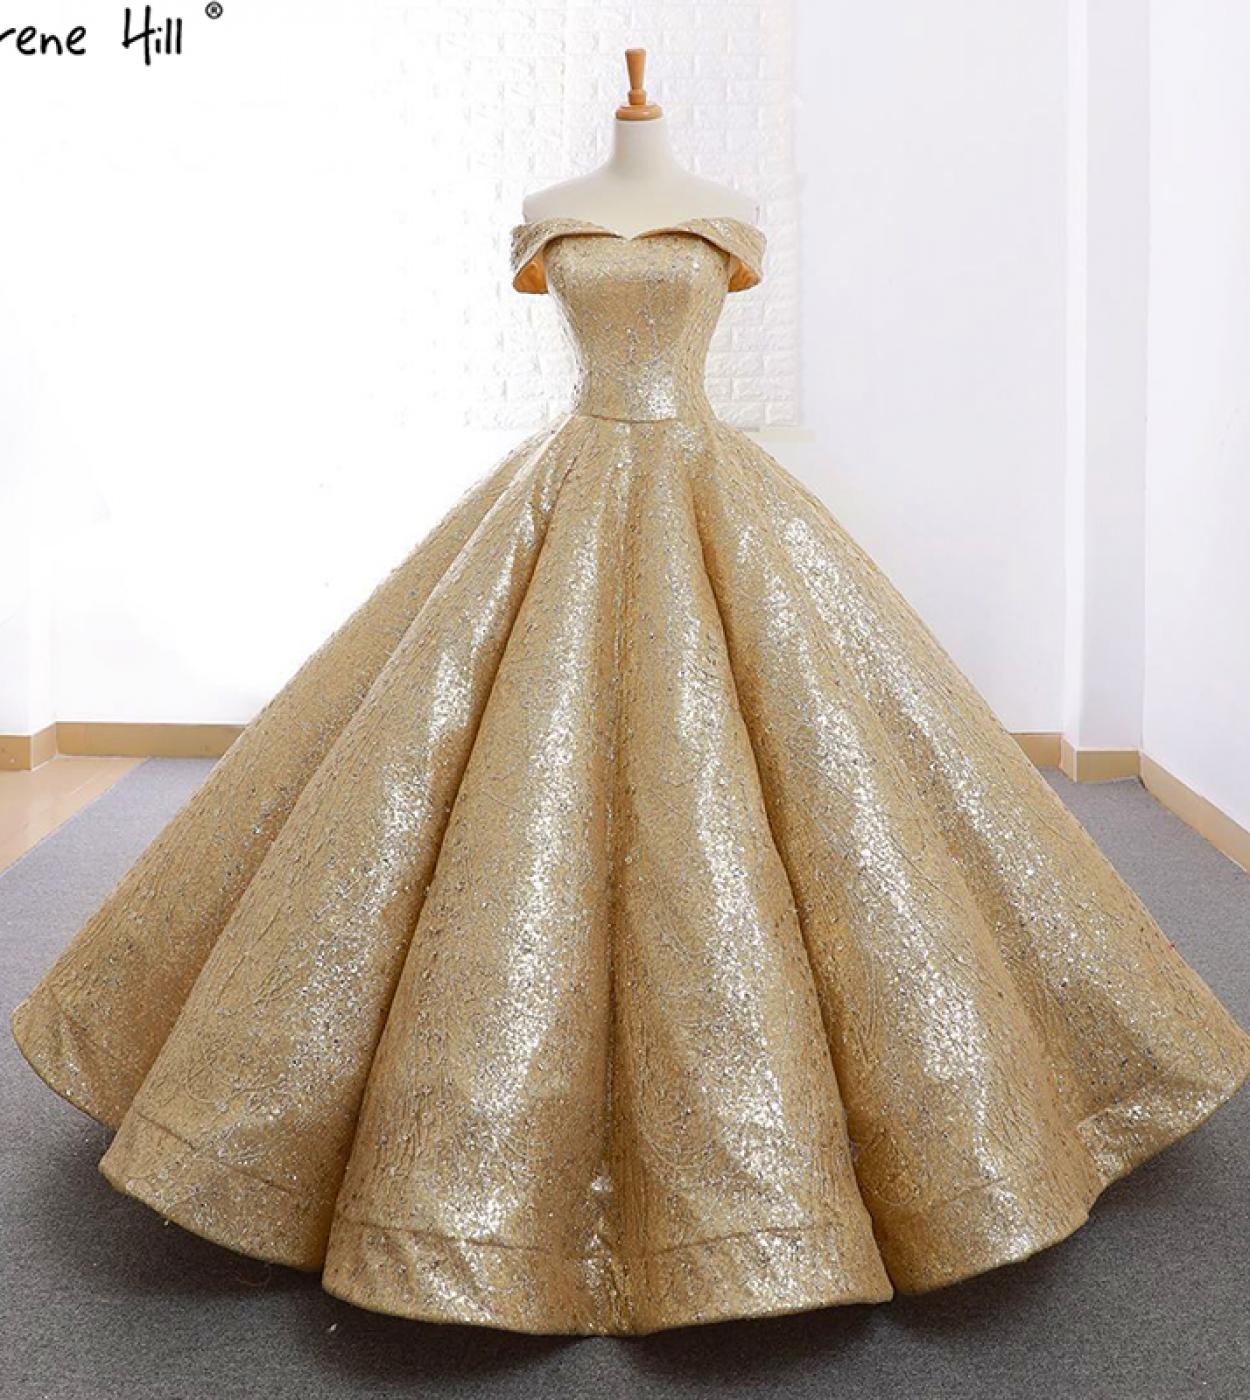 New Luxury Champagne Gold Princess Wedding Dress  Sleeveless Highend Fashion Lace Up Bridal Gown Real Photo 66671  Weddi